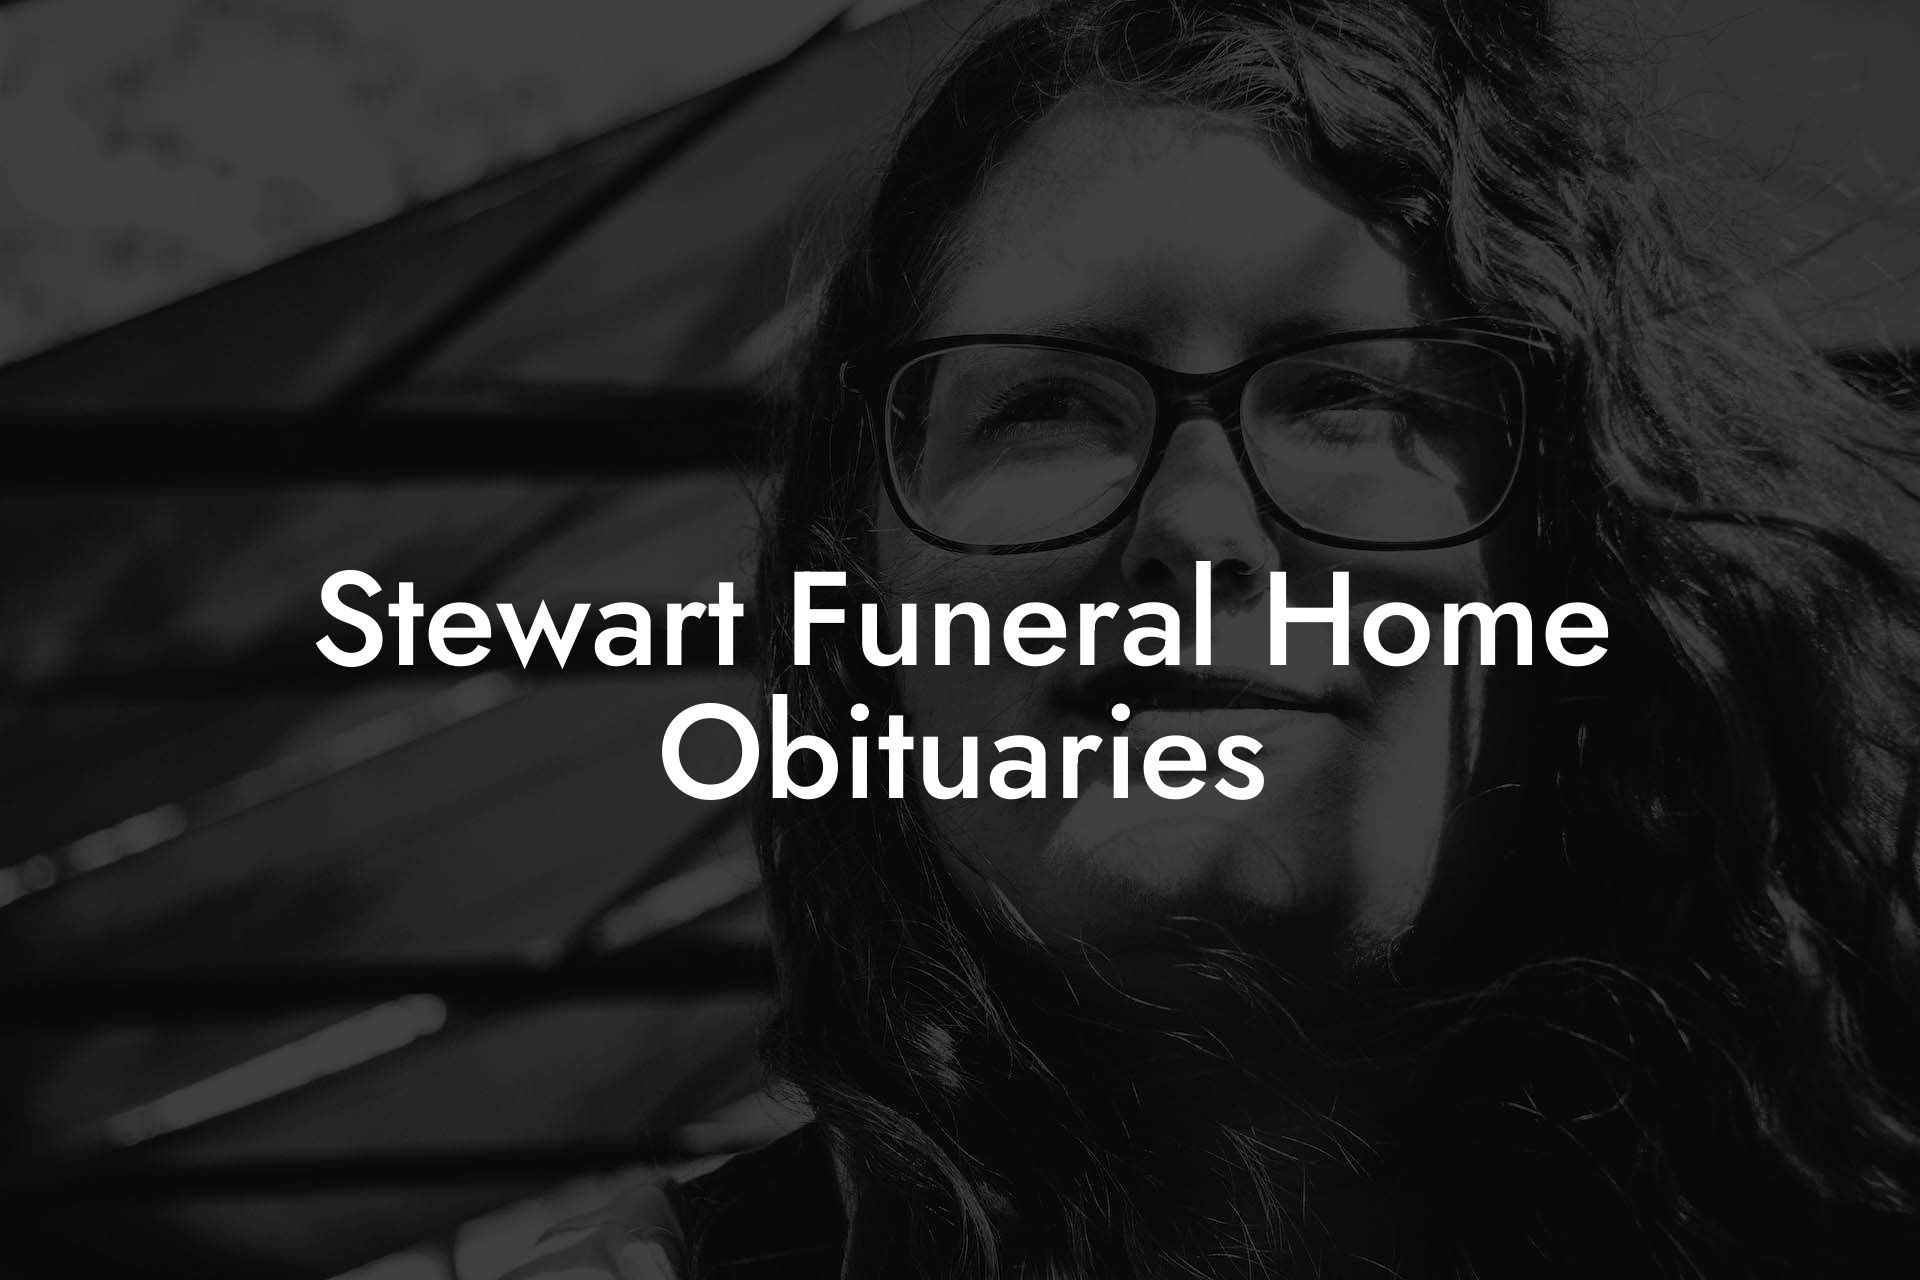 Stewart Funeral Home Obituaries